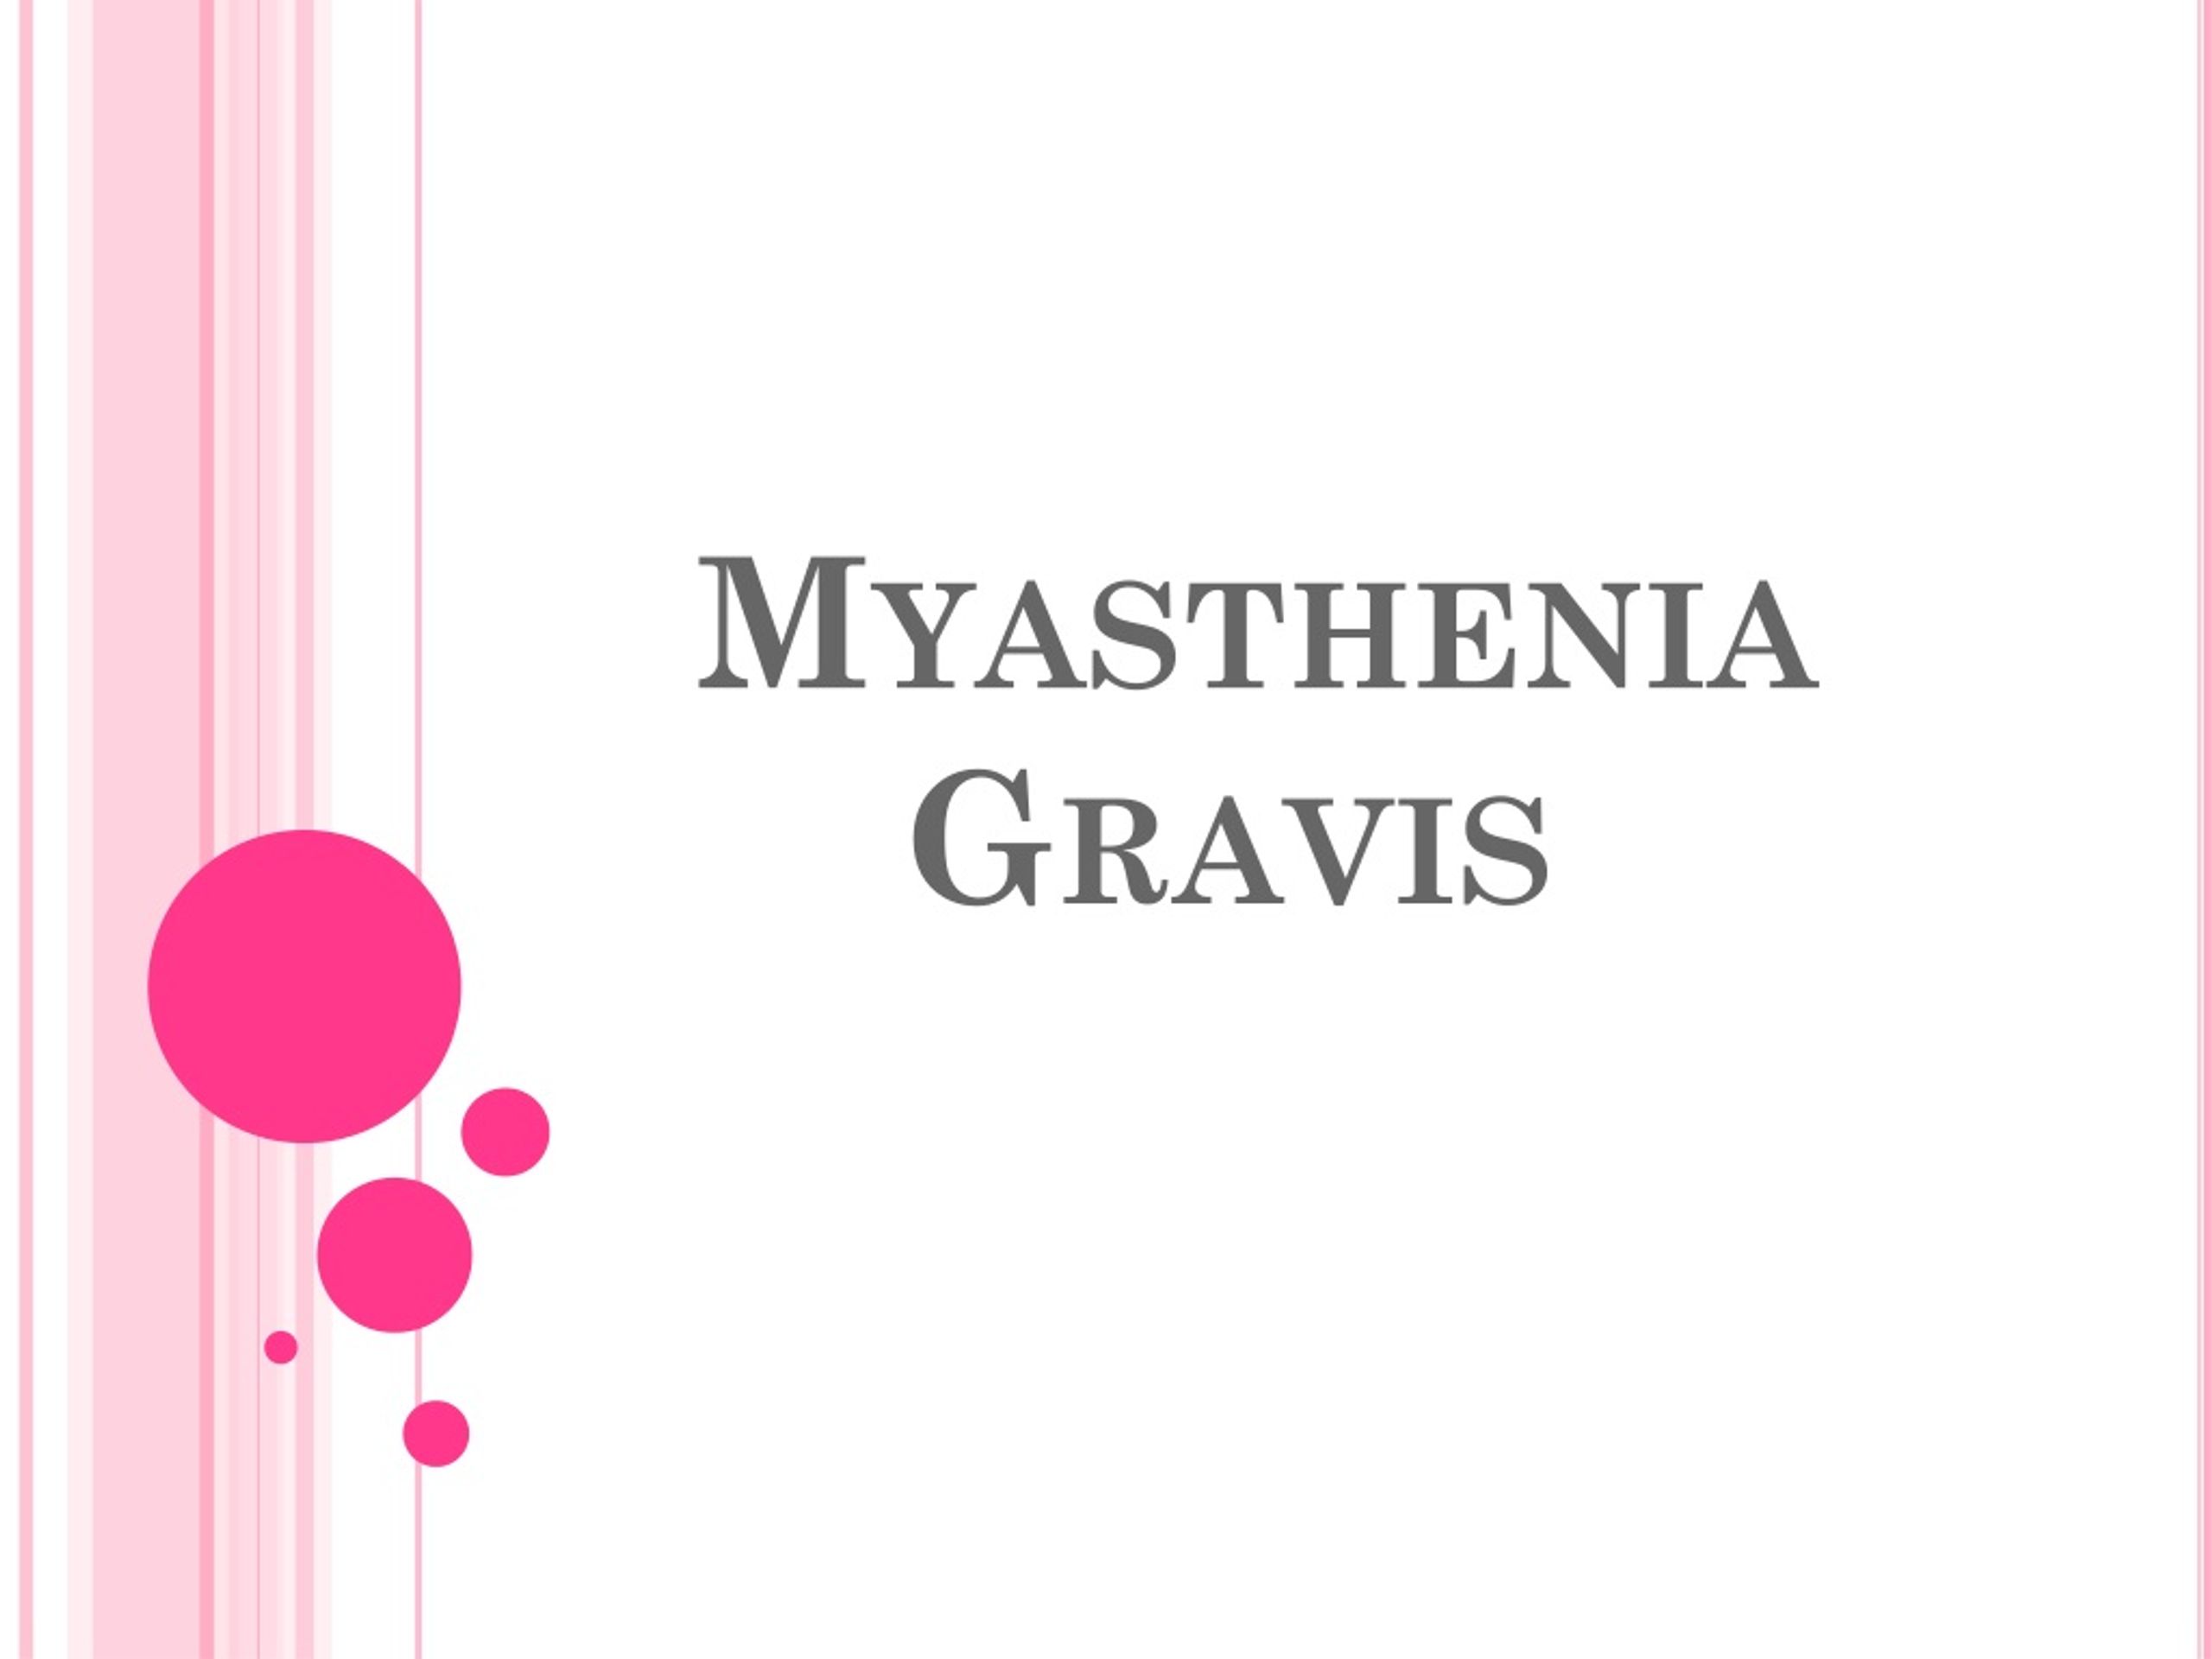 Ppt Myasthenia Gravis Powerpoint Presentation Free Download Id367295 3415